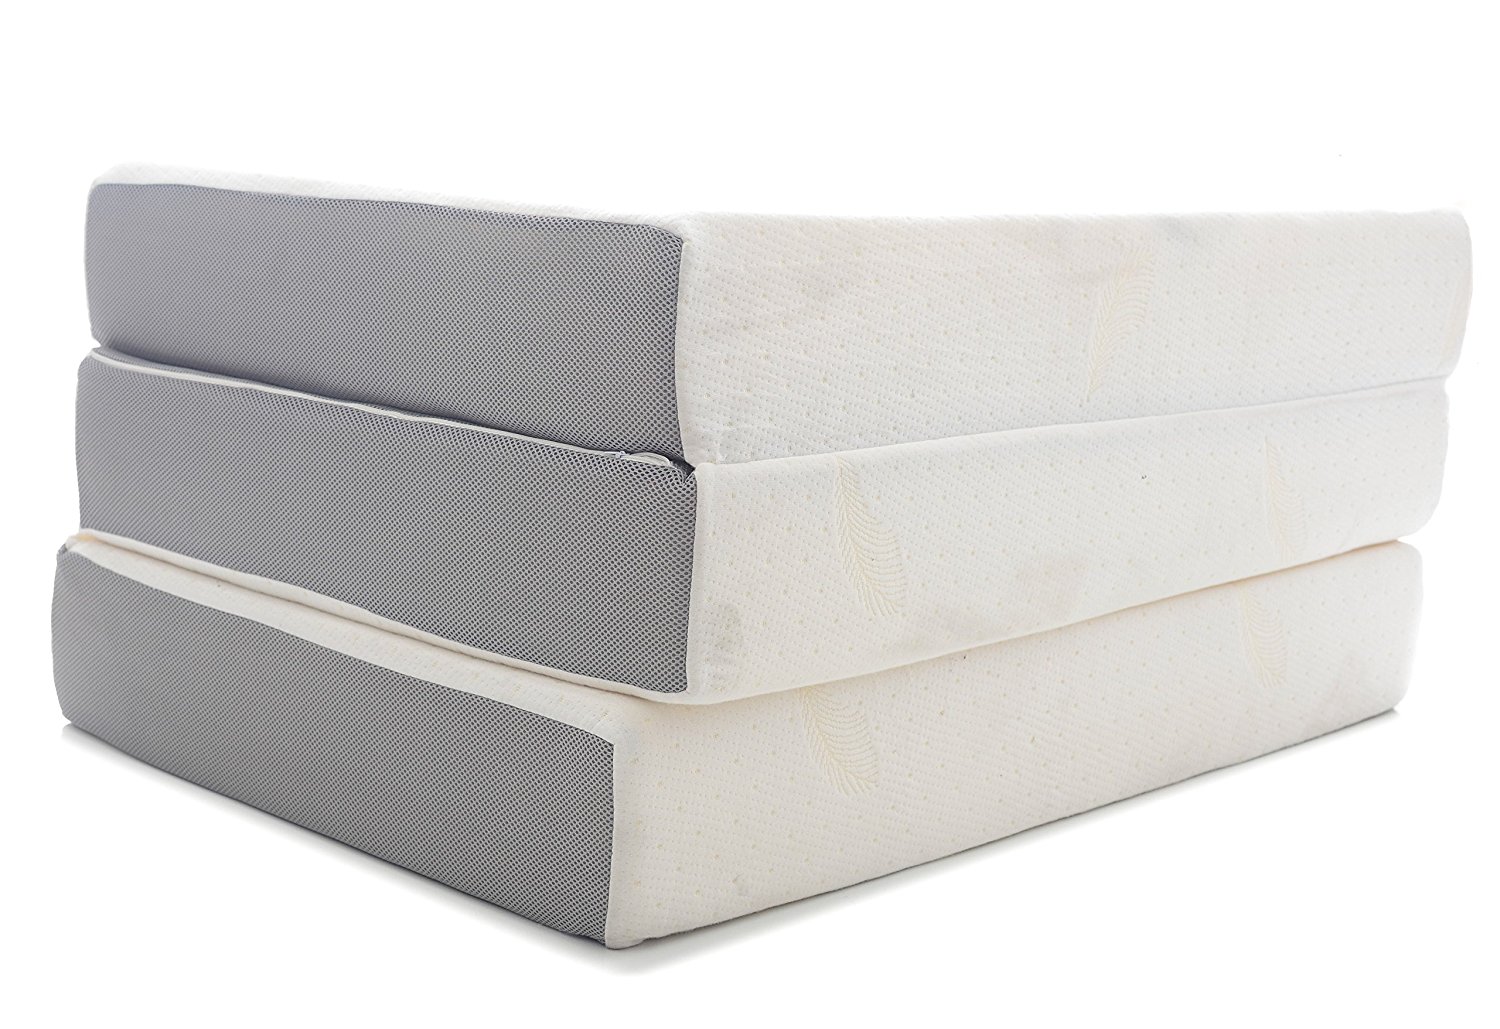 6 inch tri fold mattress cover pattern